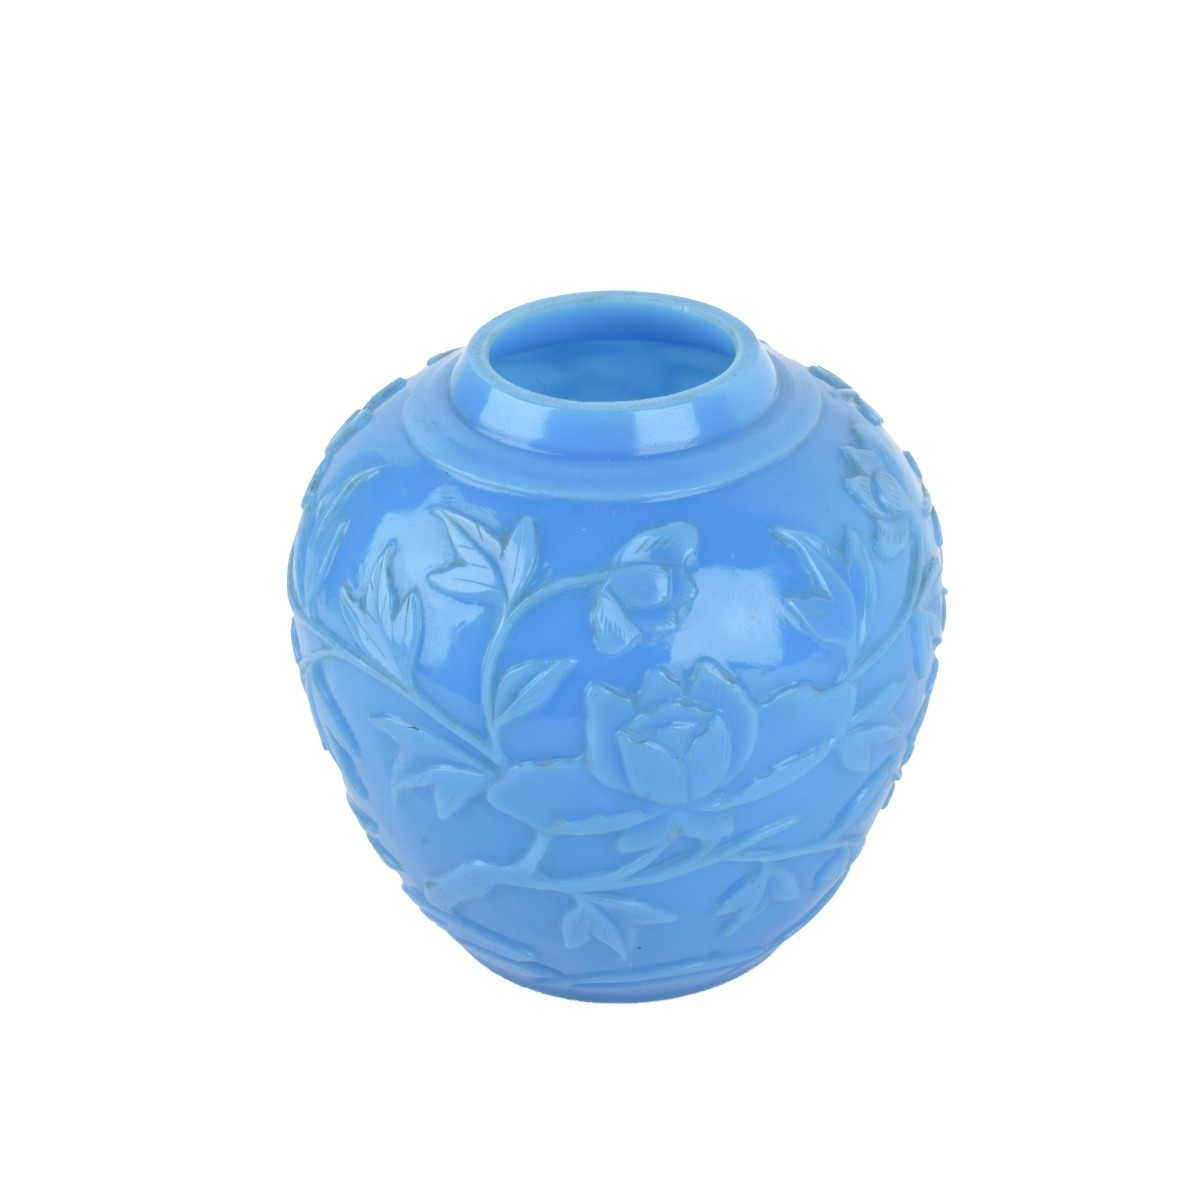 Early 20th C. Chinese Peking Glass Jar